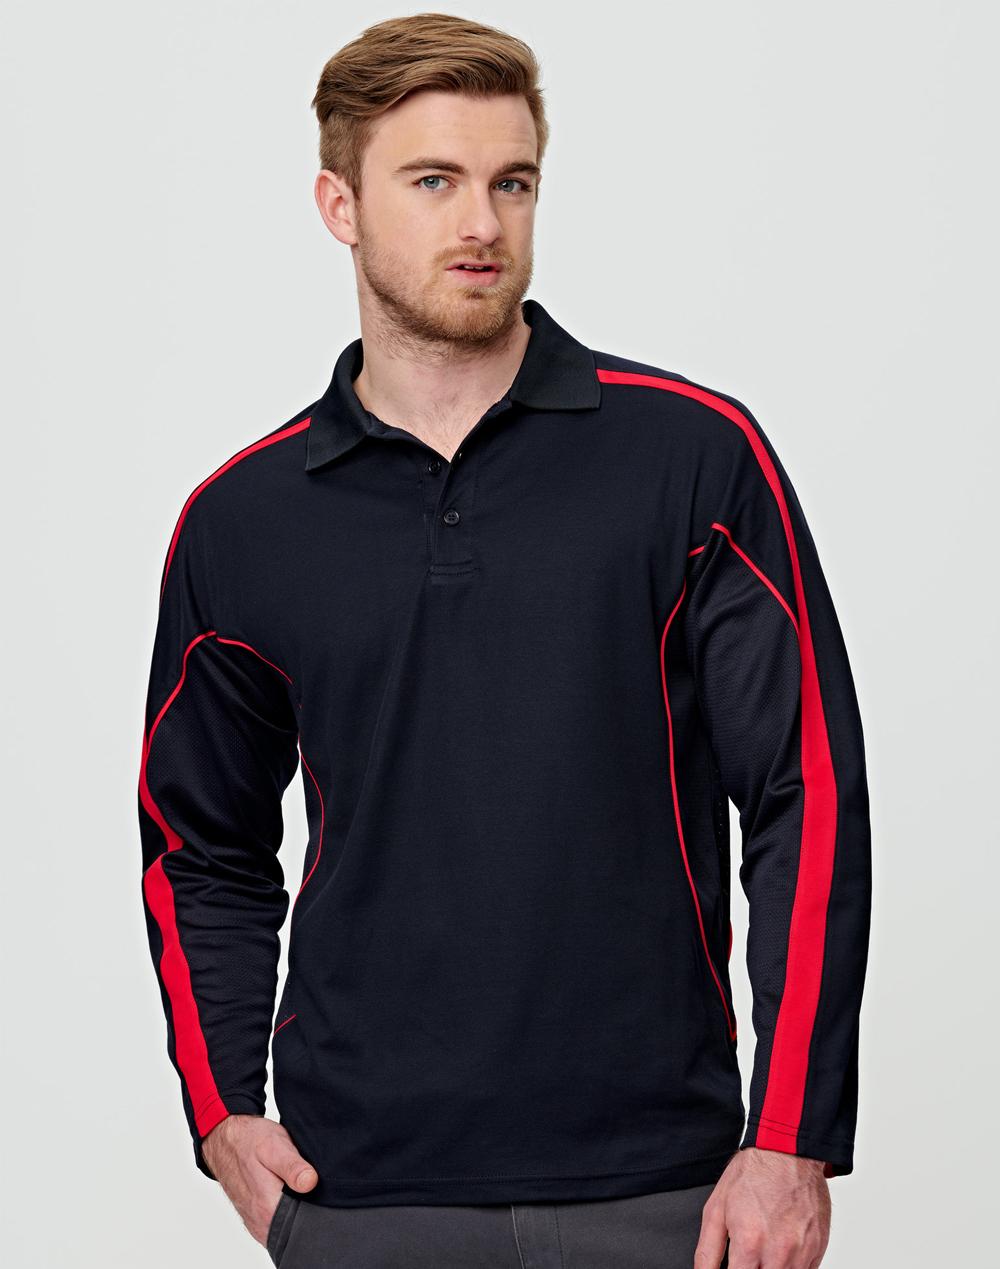 Winning Spiri-Men's TrueDry Fashion Long Sleeve Polo-PS69